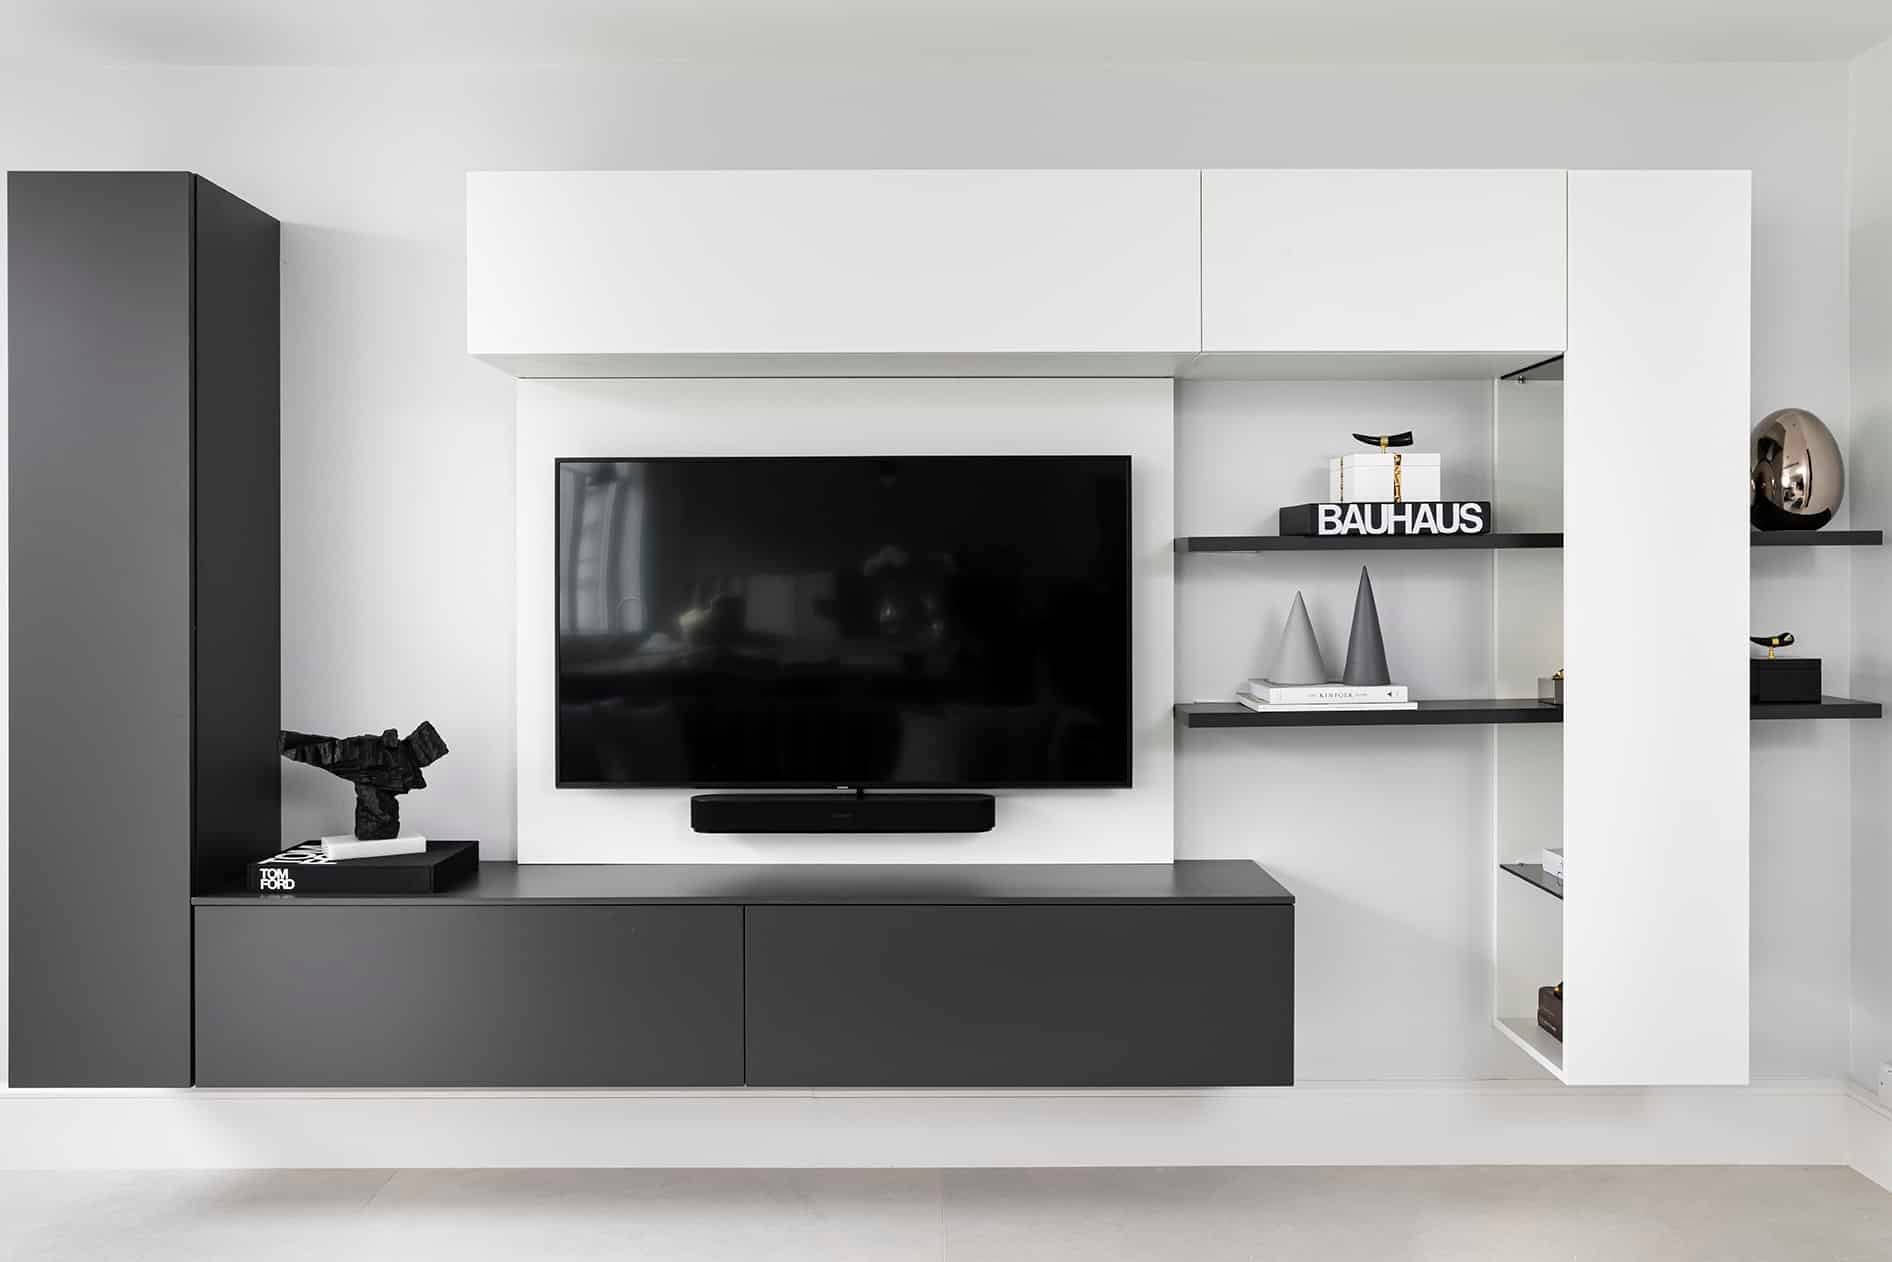 Wimbledon Interior Design for a Wall-hung TV